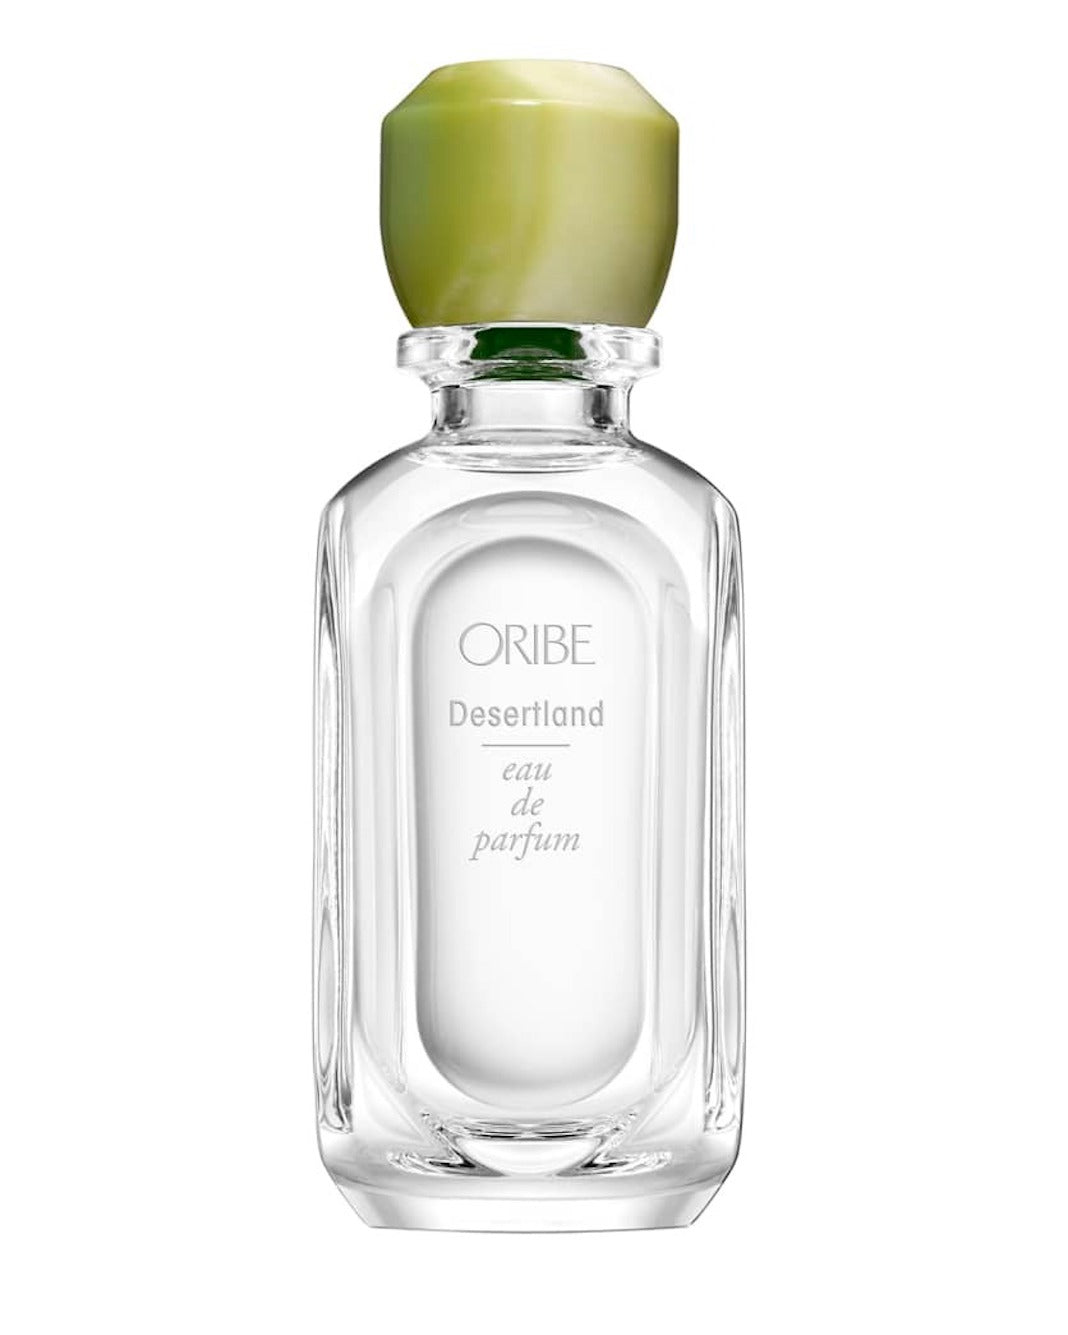 Oribe Desertland Fragrance